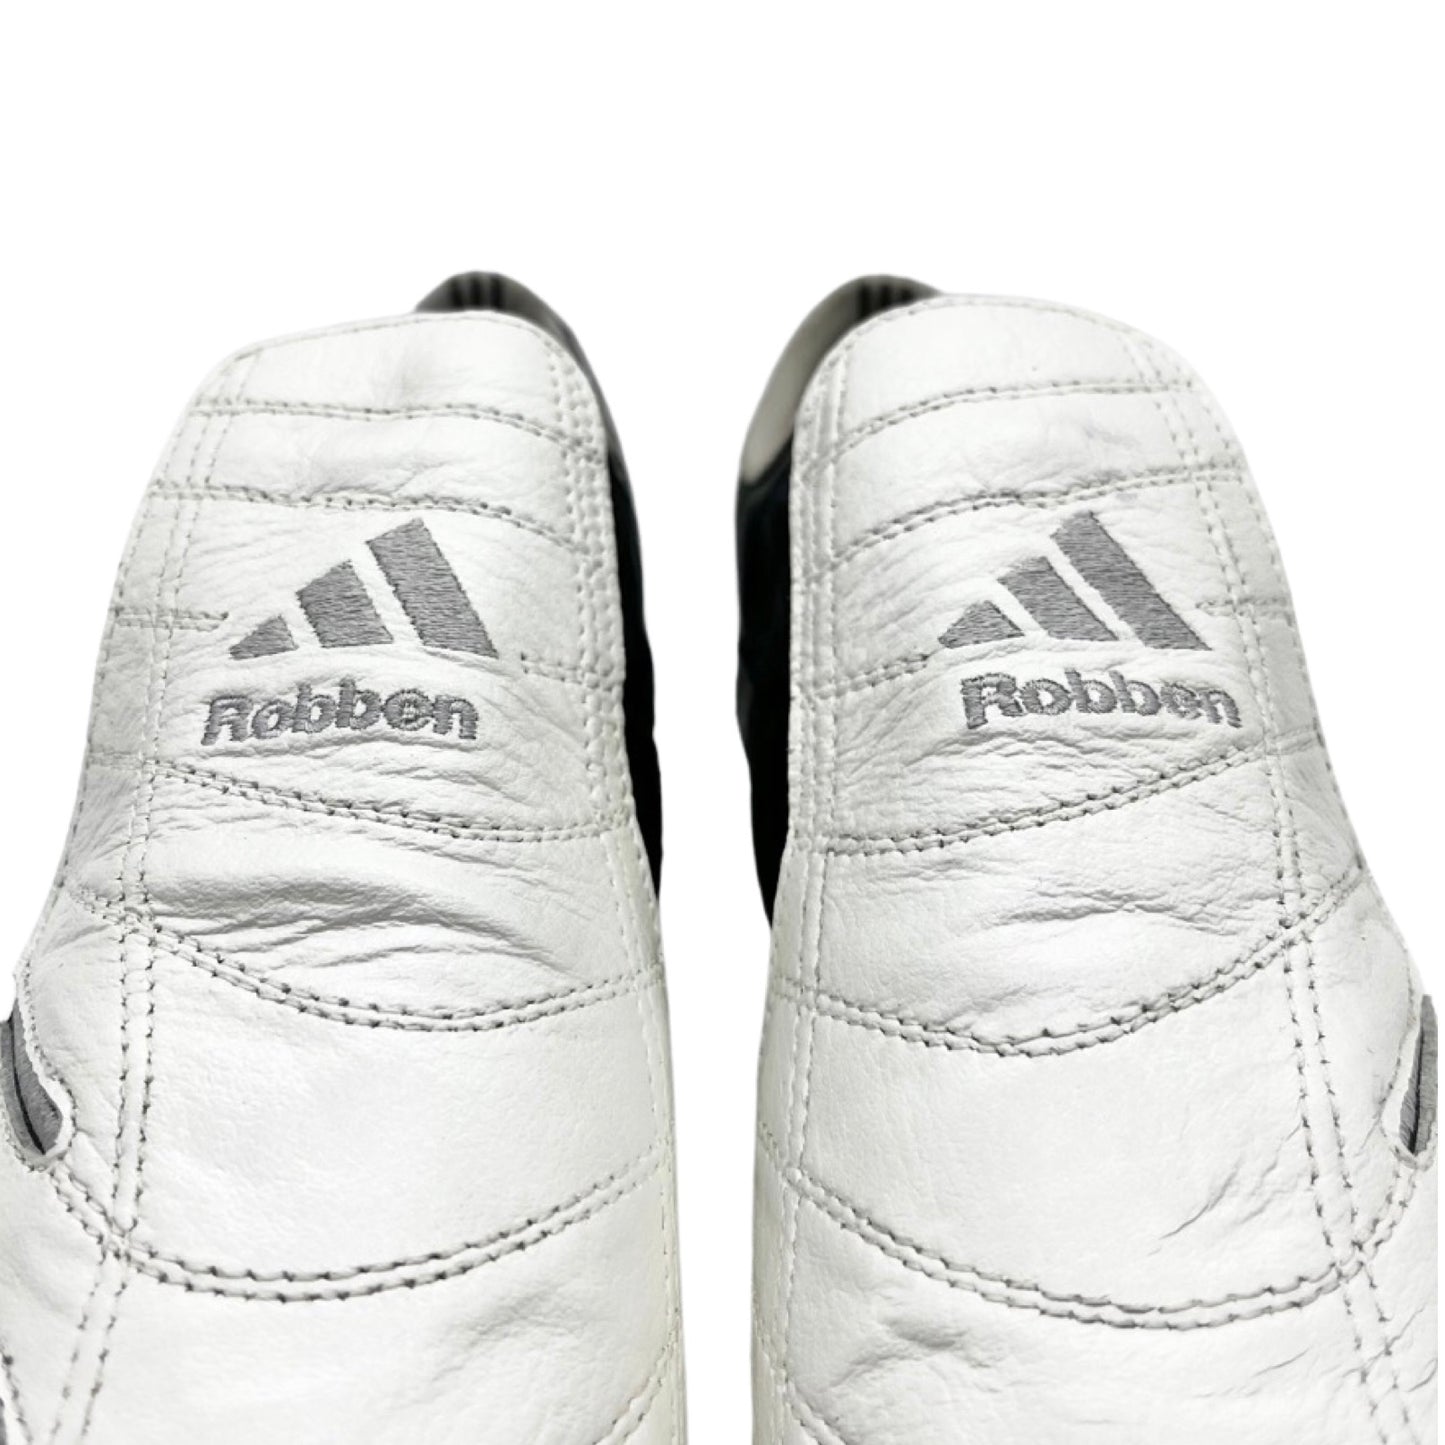 Arjen Robben Match Worn Adidas F50+